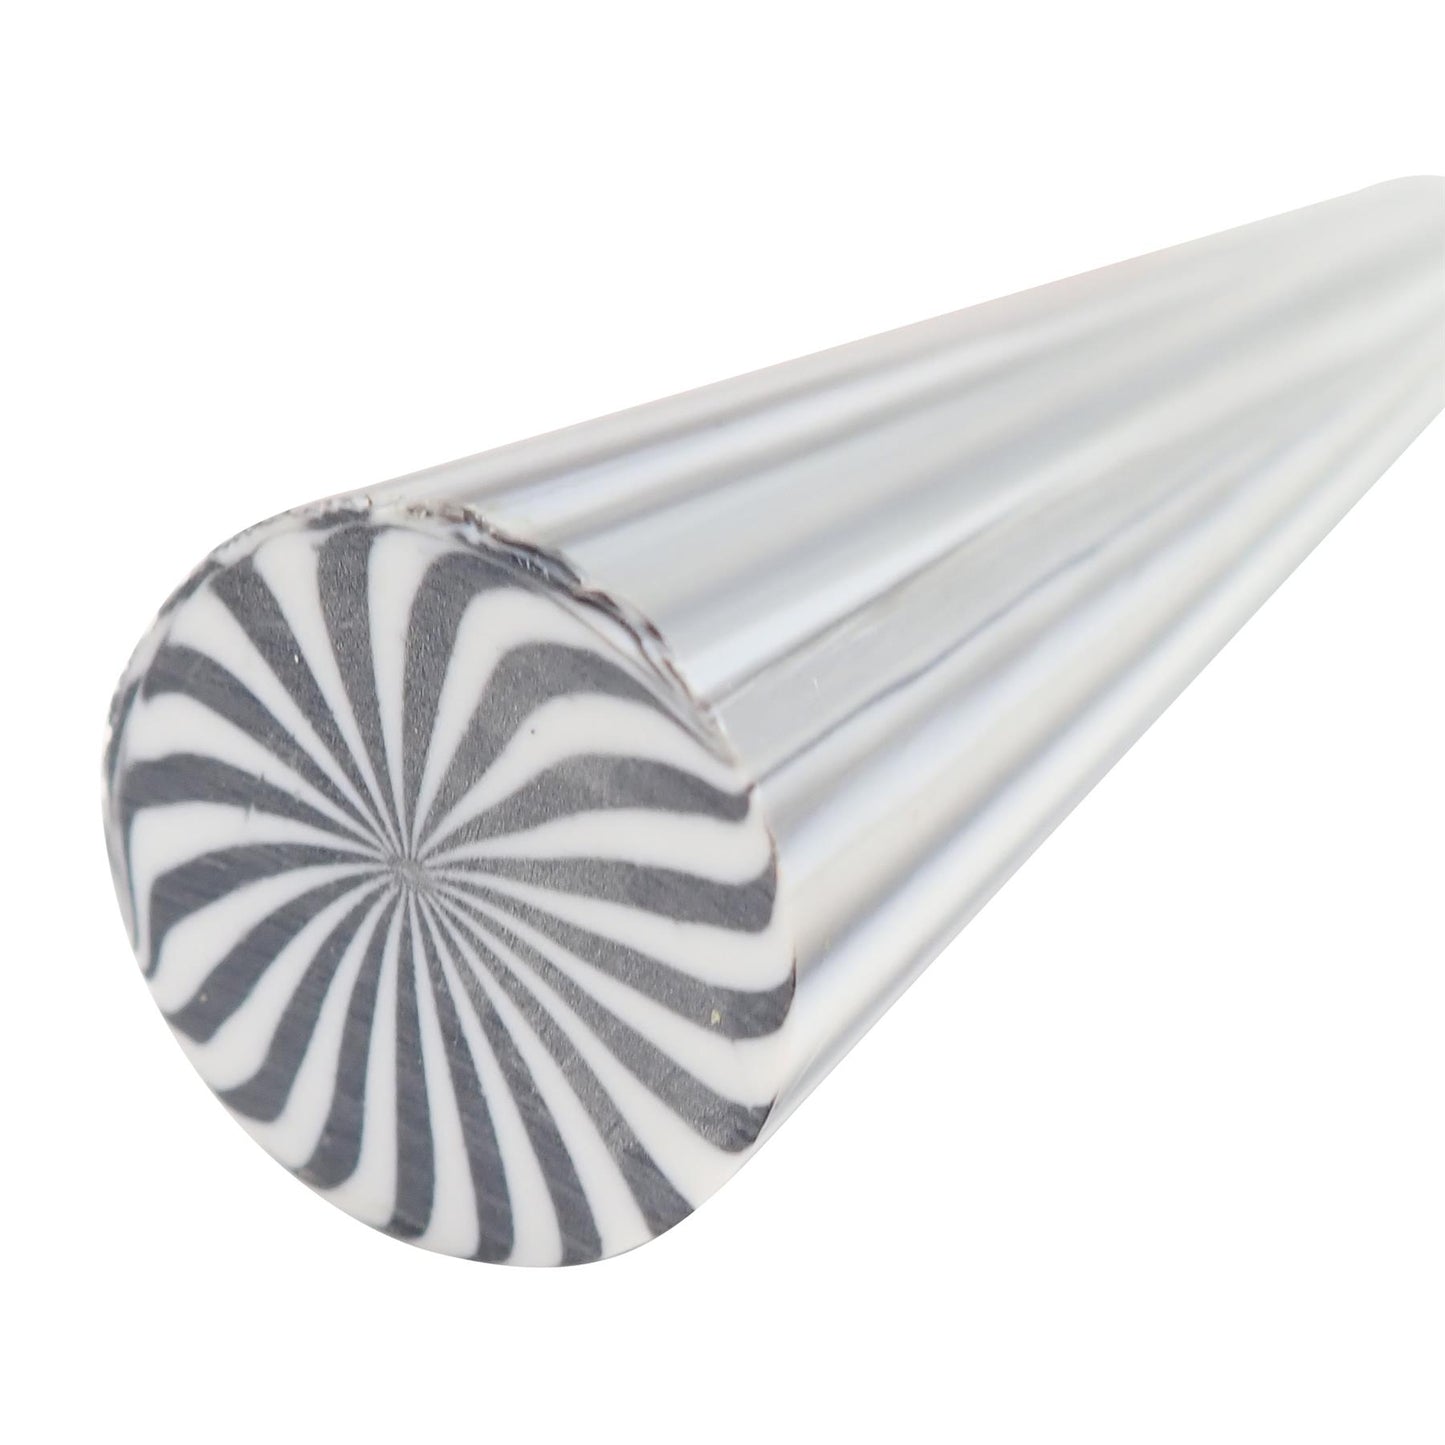 [Turners' Mill] Black/White Zebra Polyester Turning Blank - 63.5x39x39mm